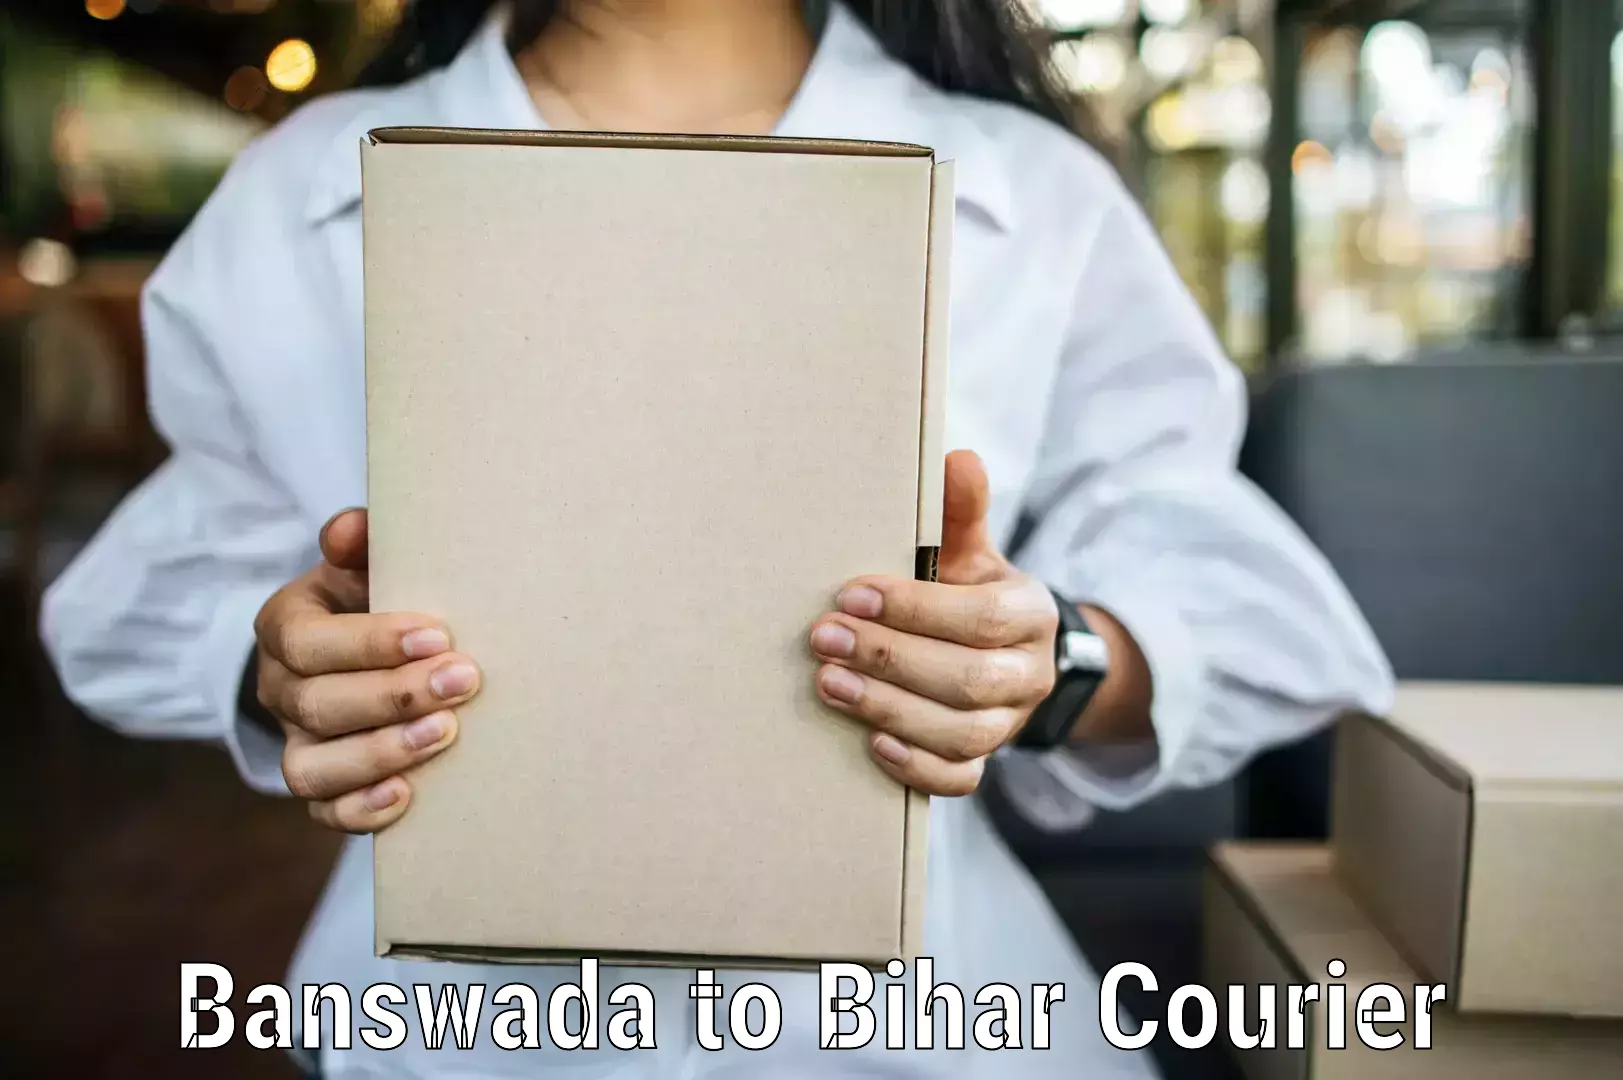 Courier service innovation Banswada to Aurai